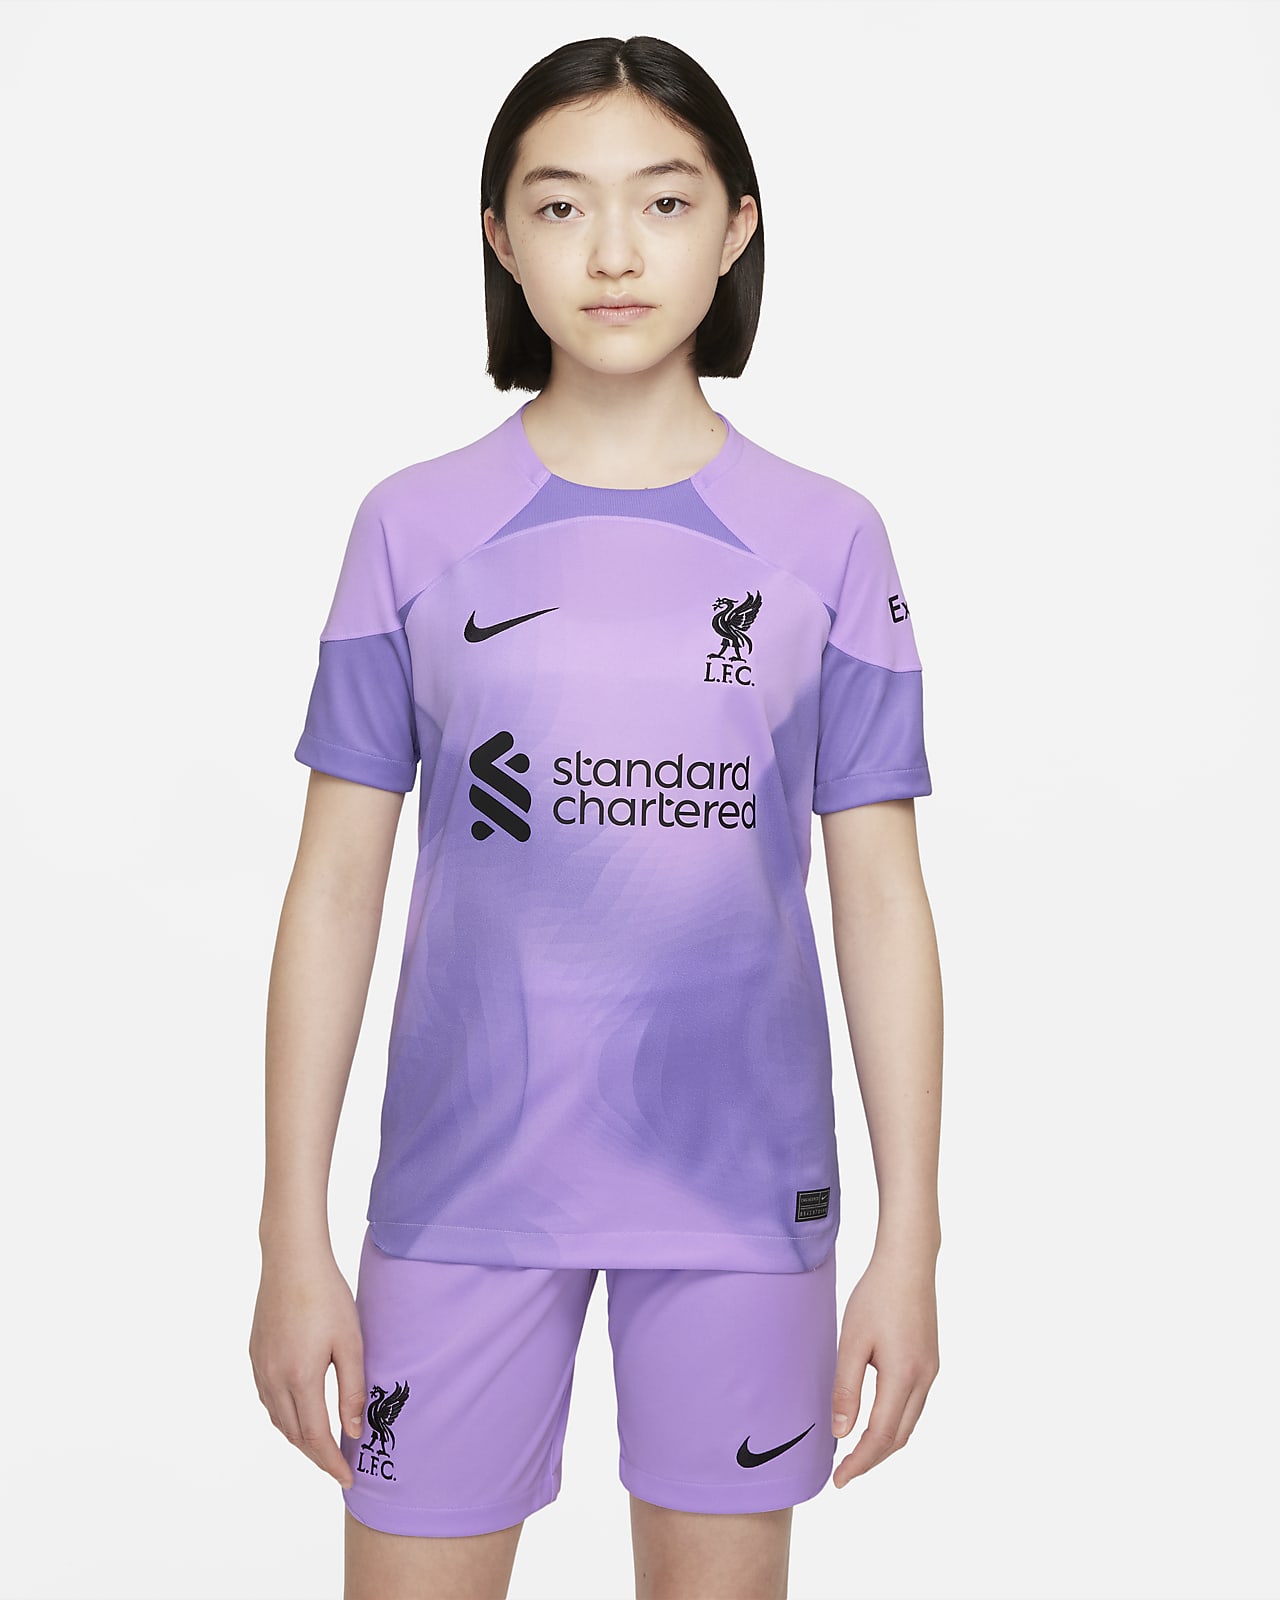 F.C. 2022/23 Stadium Goalkeeper Older Kids' Nike Dri-FIT Football Shirt. Nike